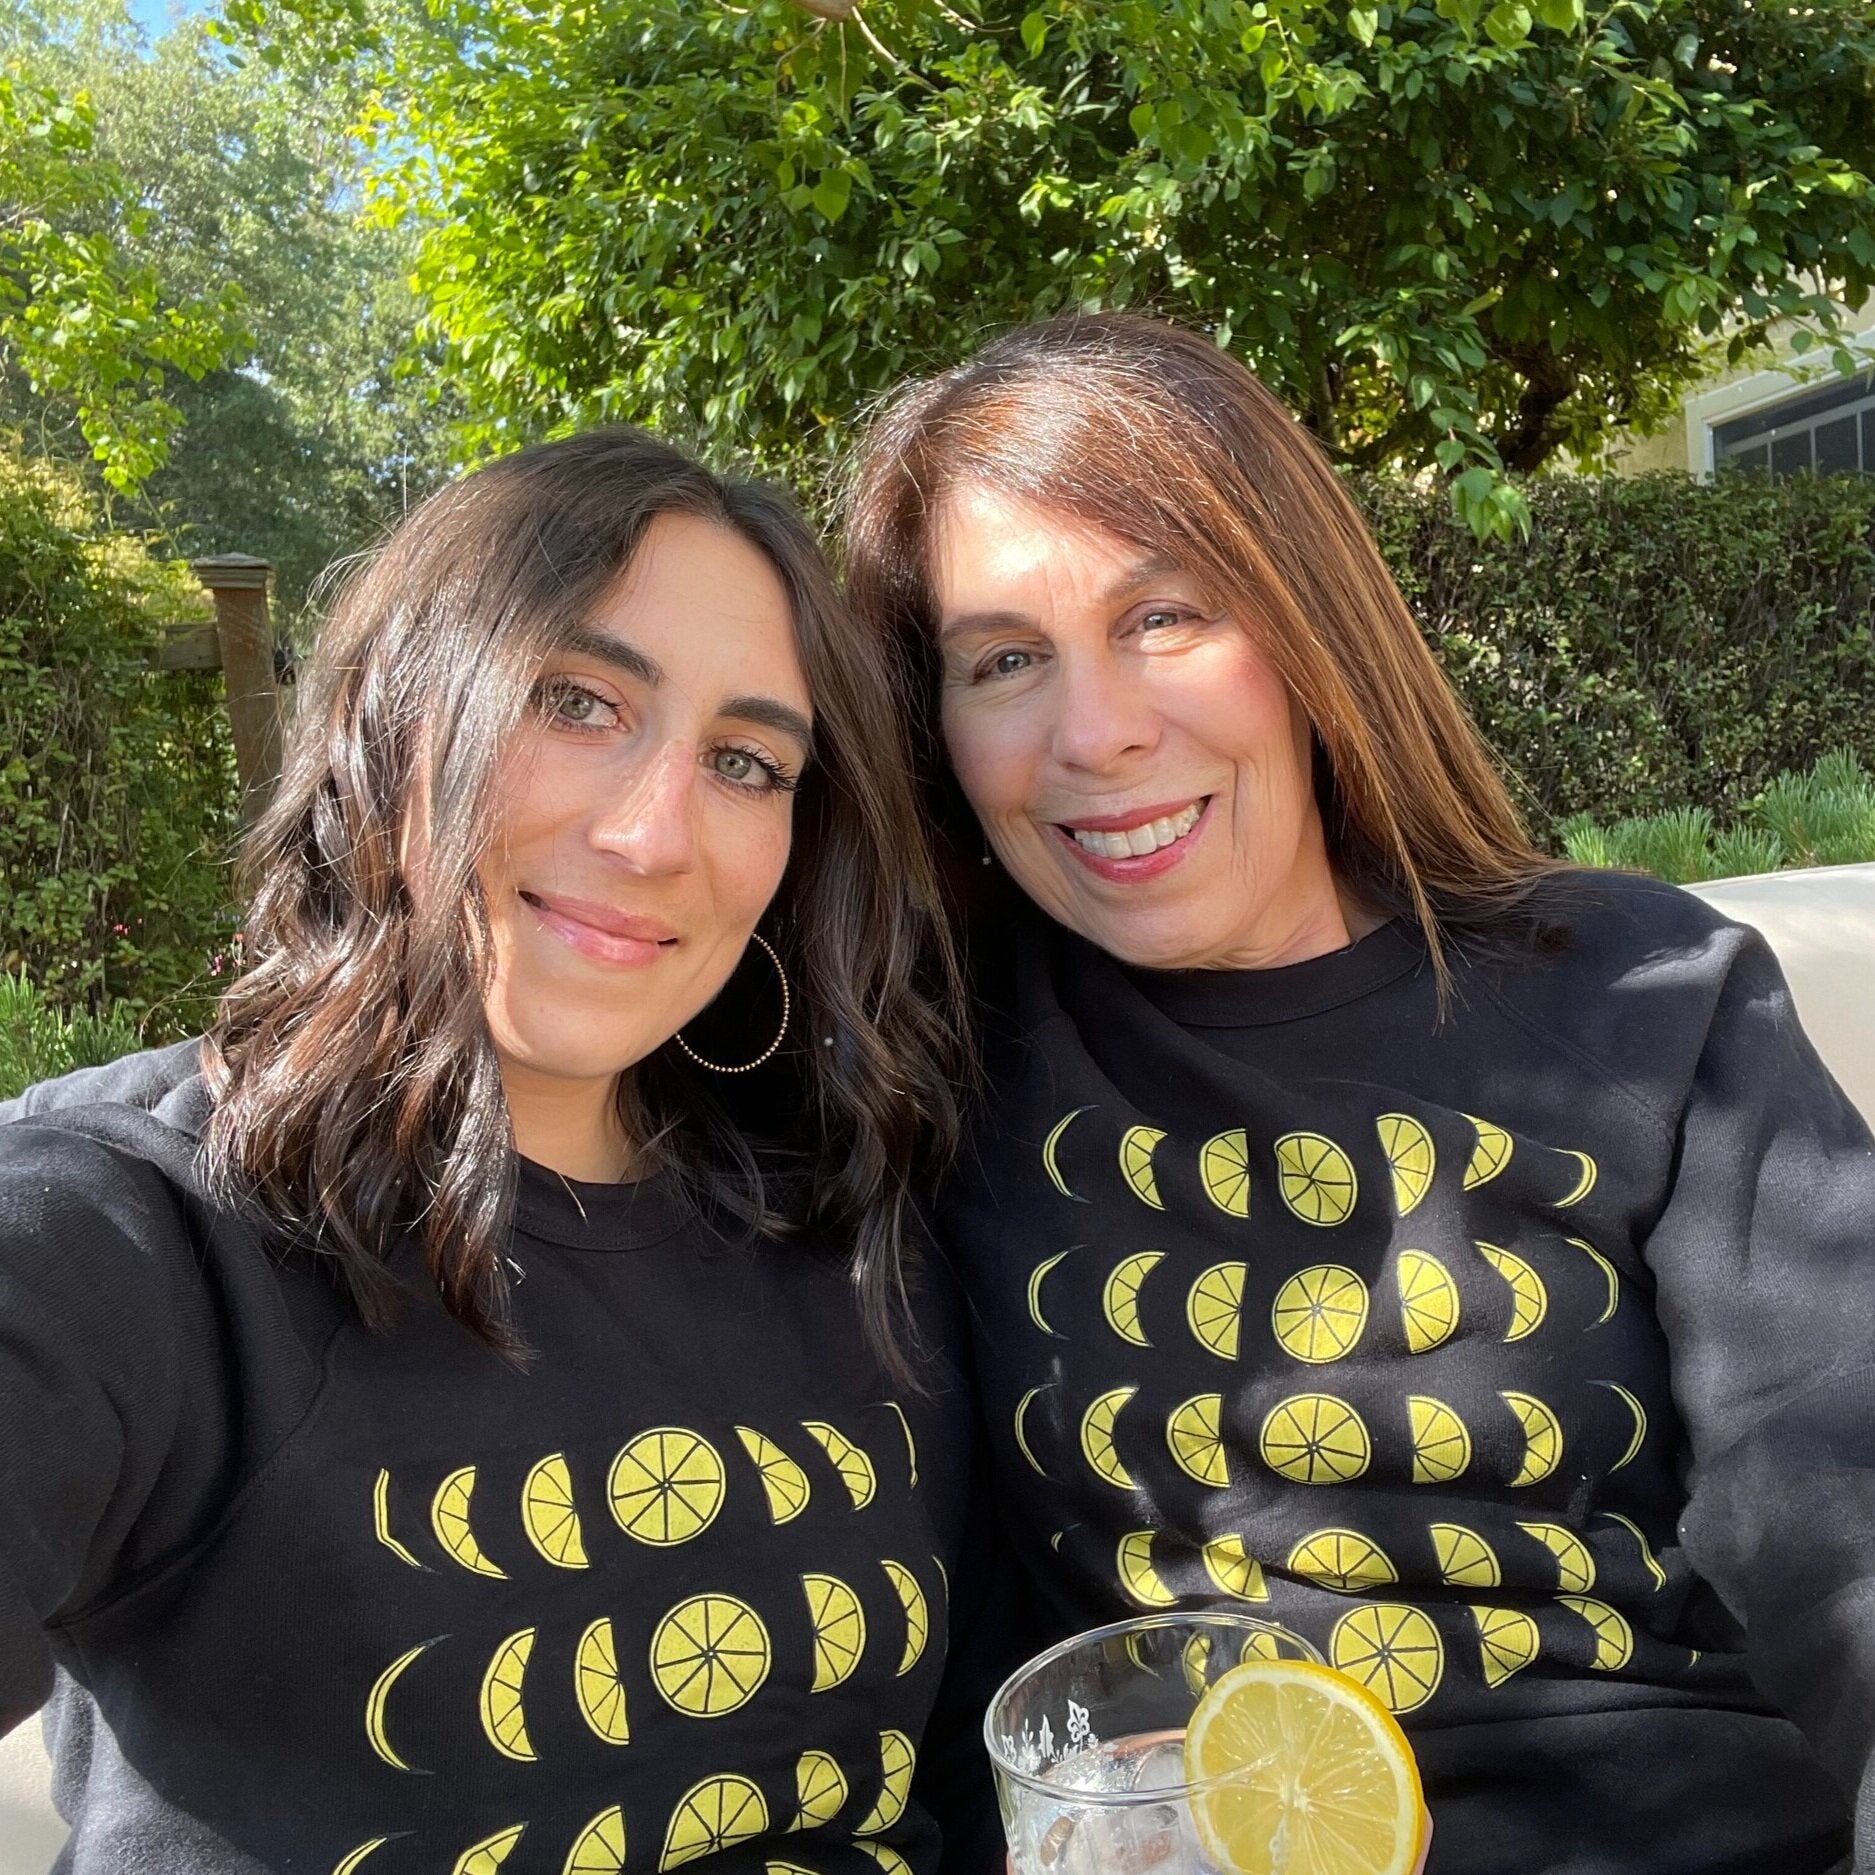 Two women wear matching black crewnecks with lemon moon phases